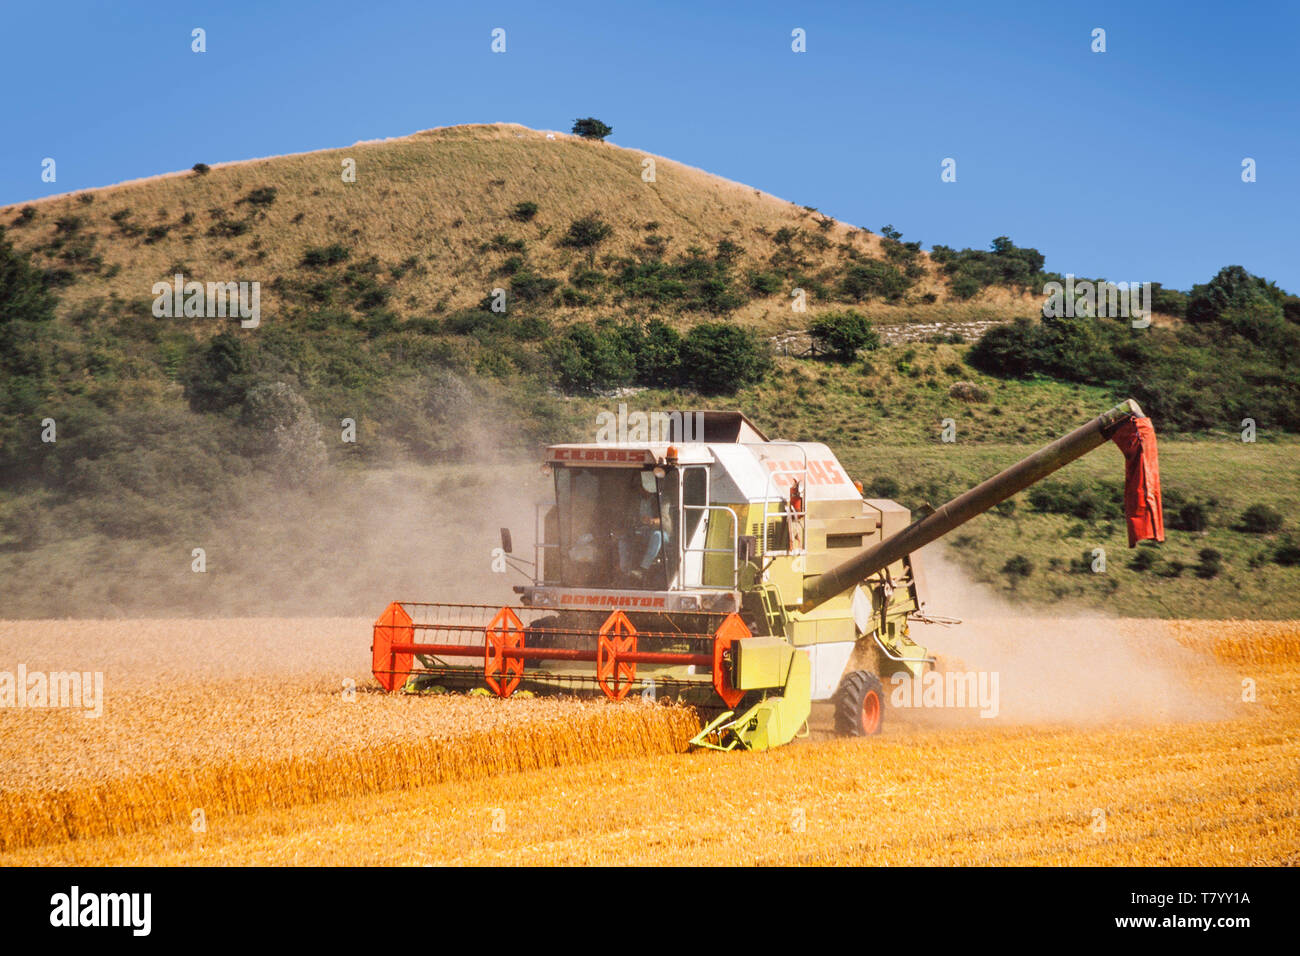 Combine harvester in operation, harvest time UK Stock Photo